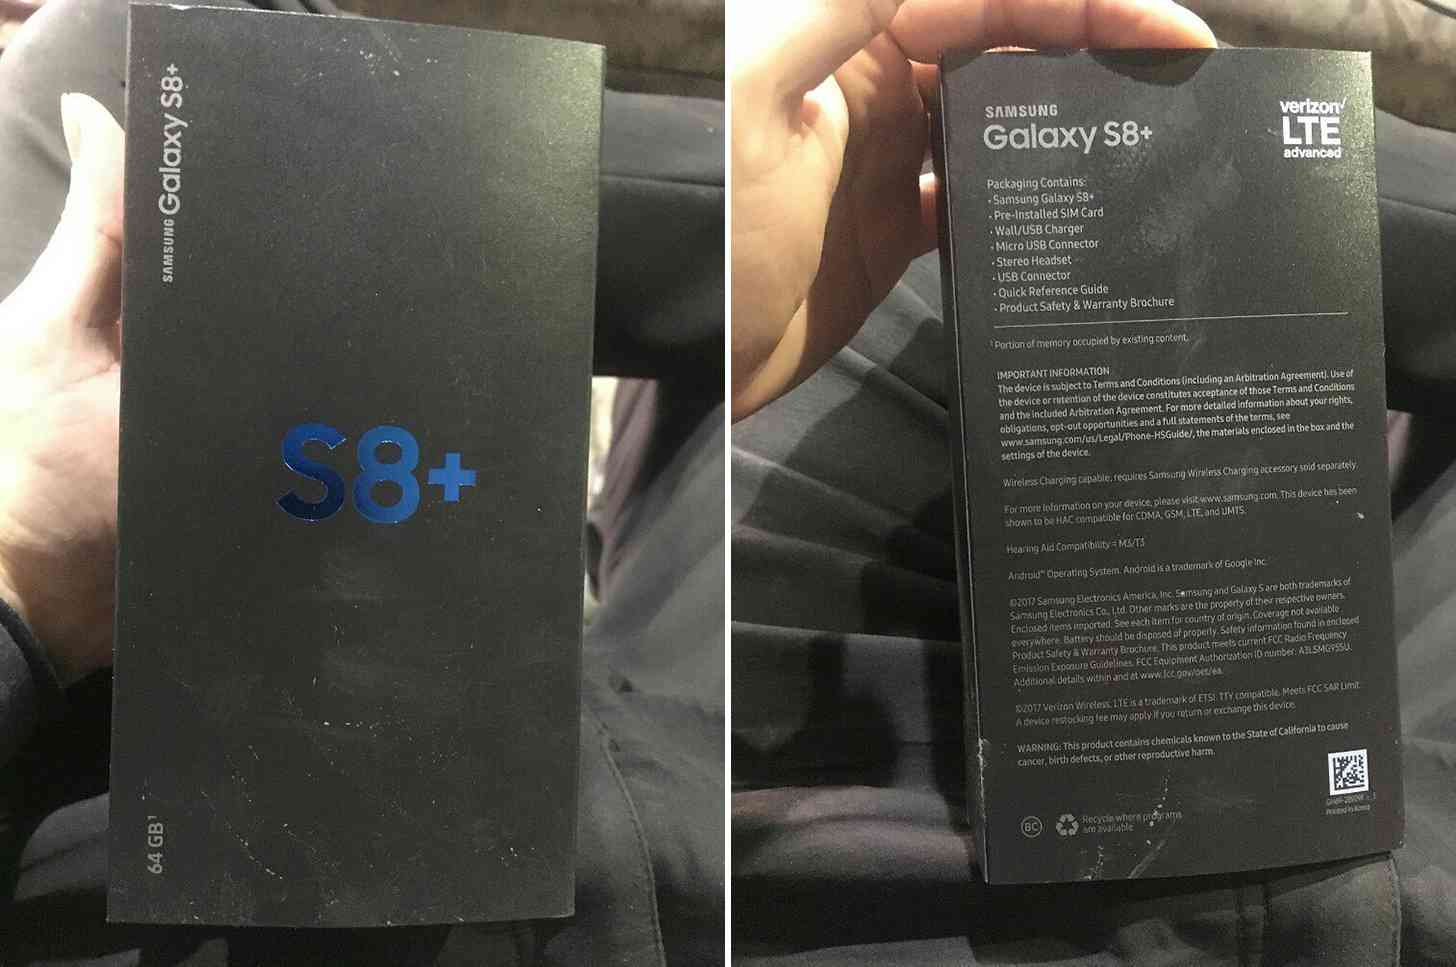 Samsung Galaxy S8+ retail packaging photos